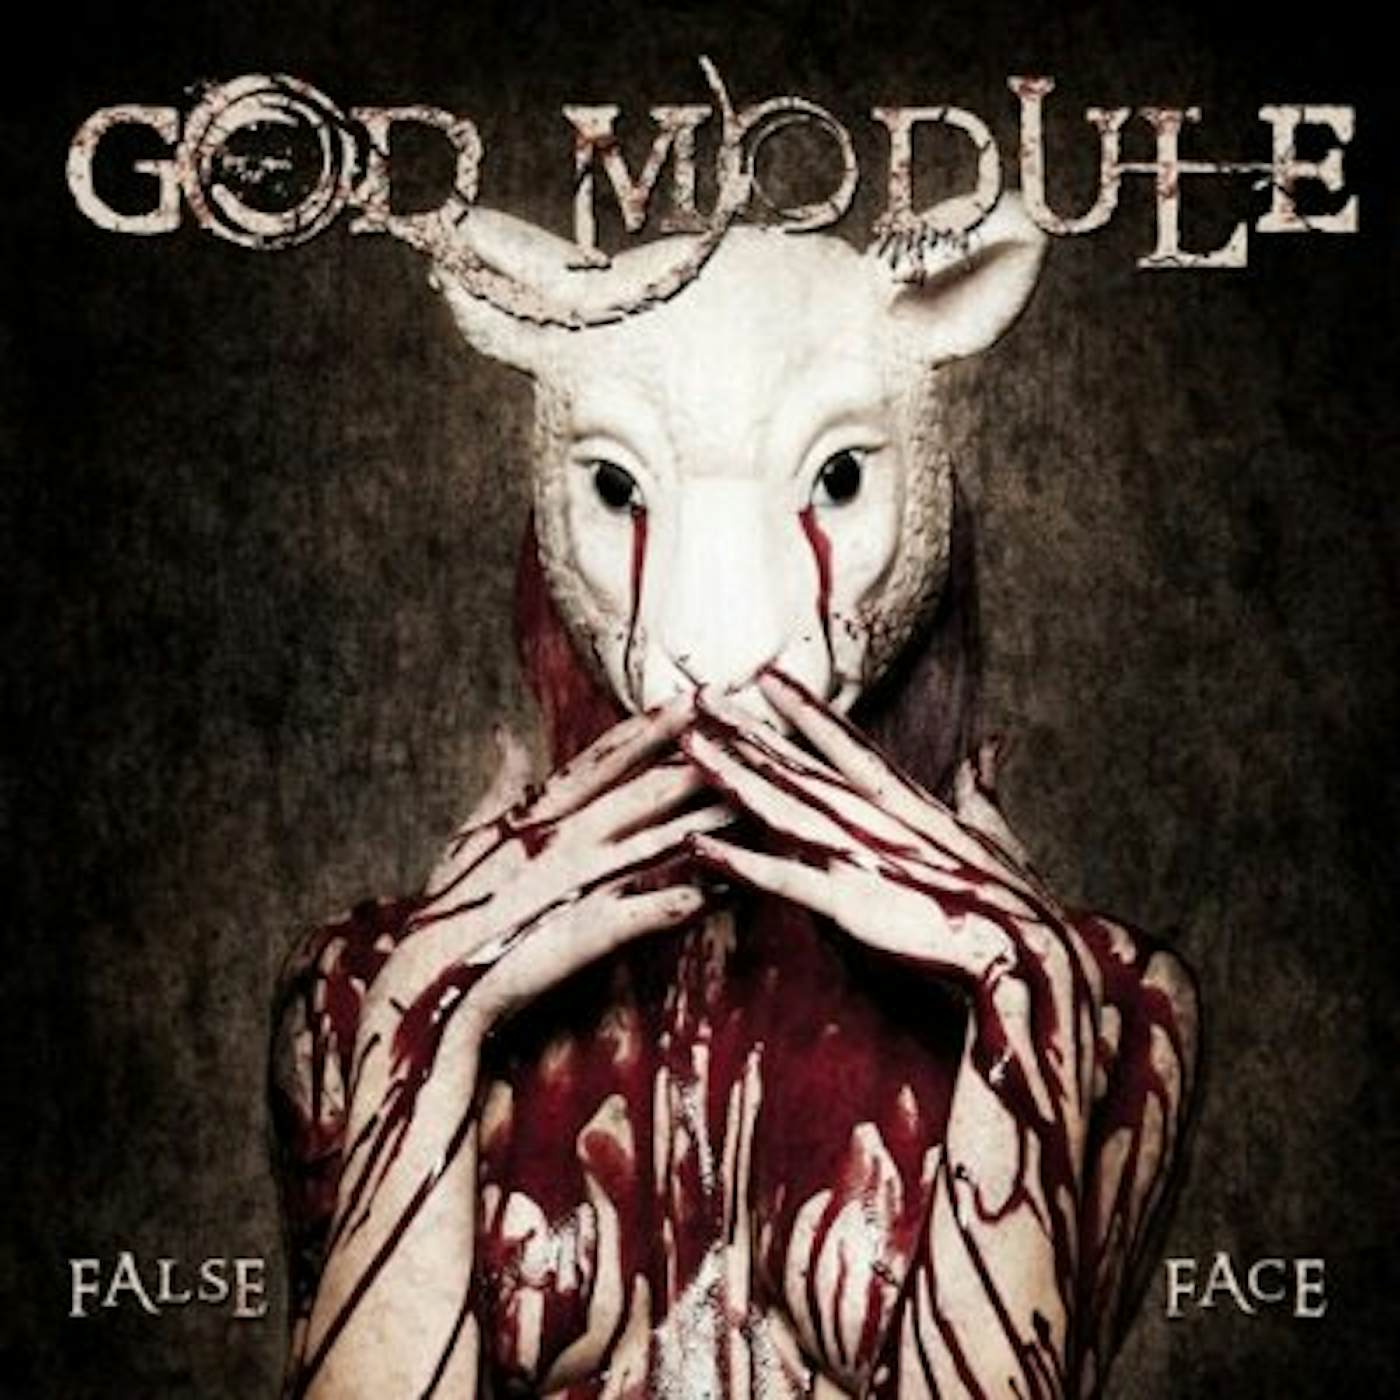 God Module FALSE FACE CD